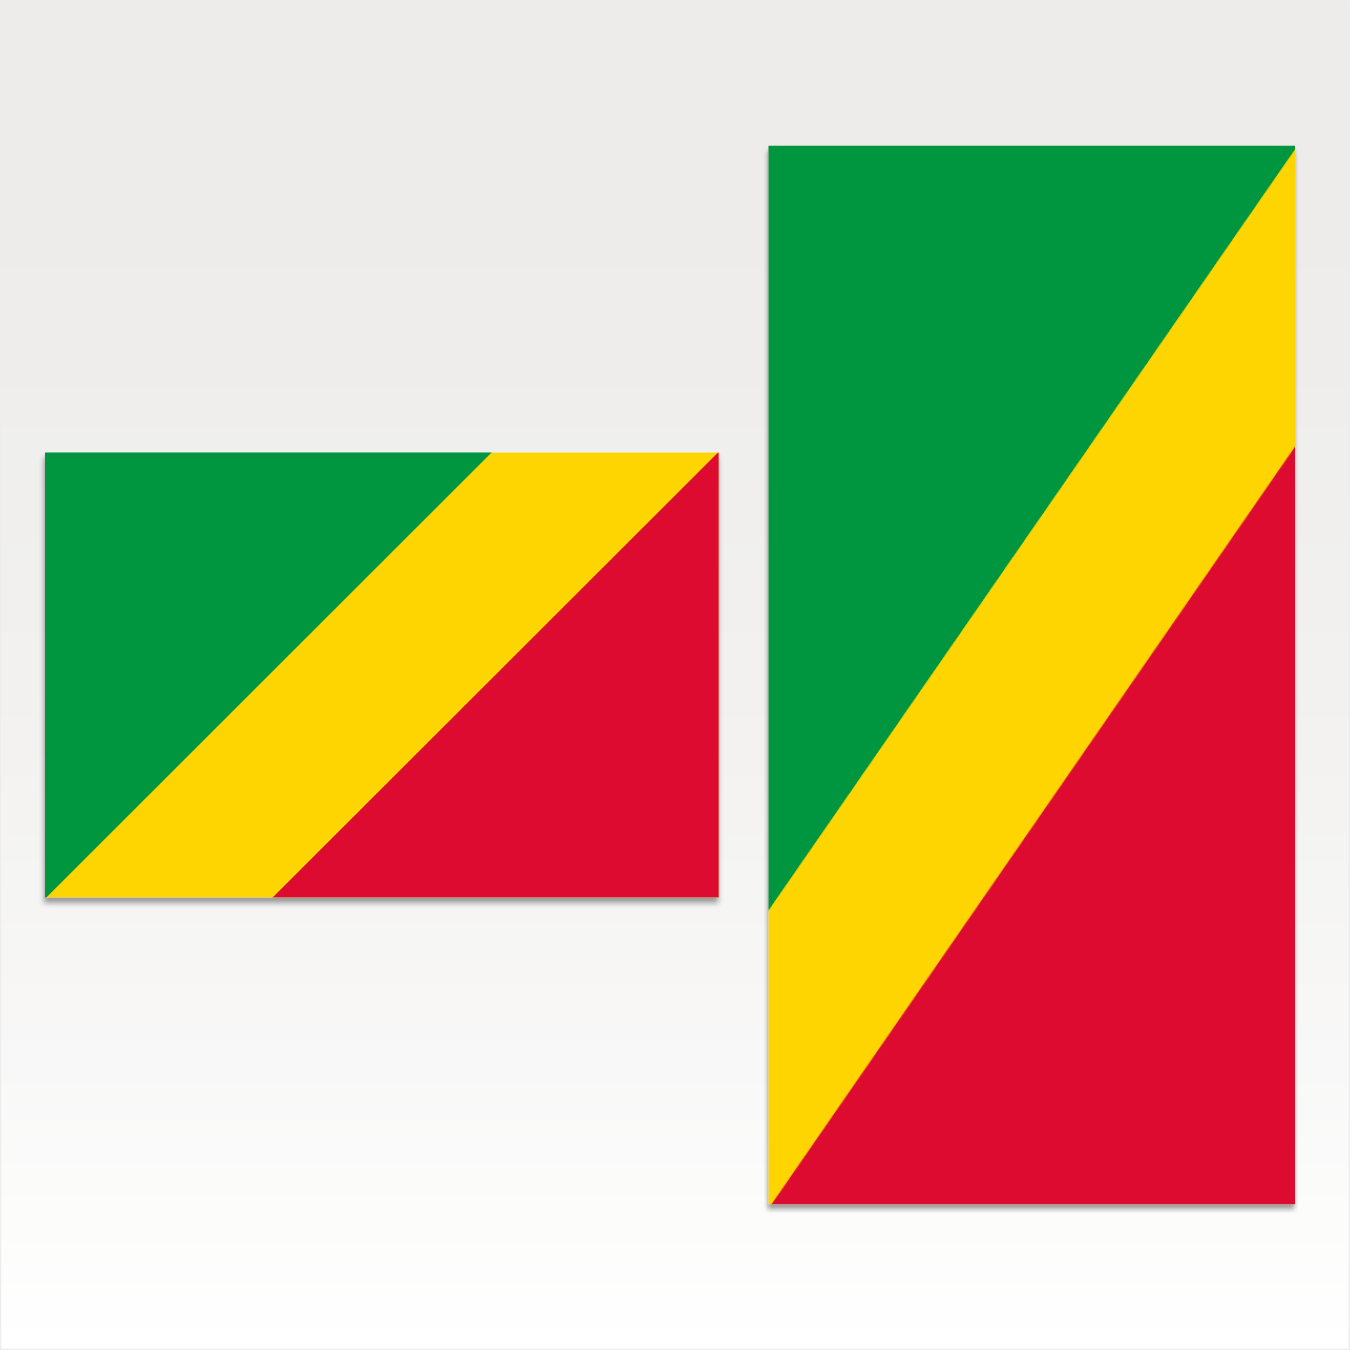 Kongo Brazzaville